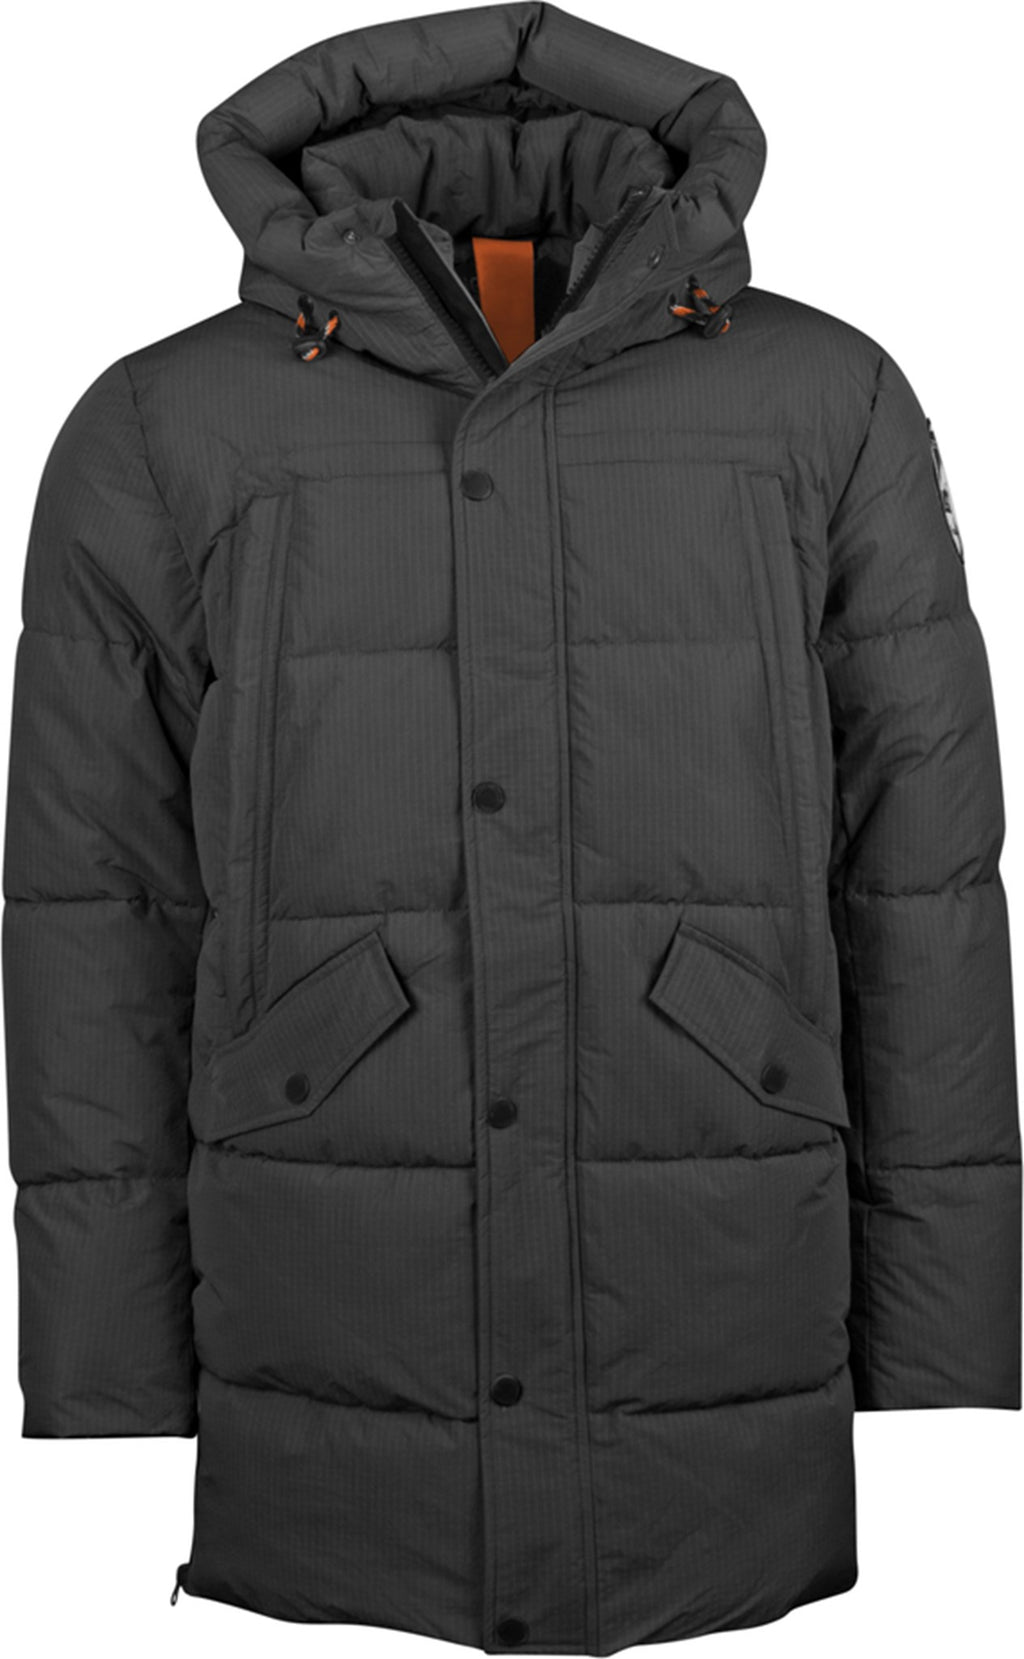 Sulmon Winter jacket - Black